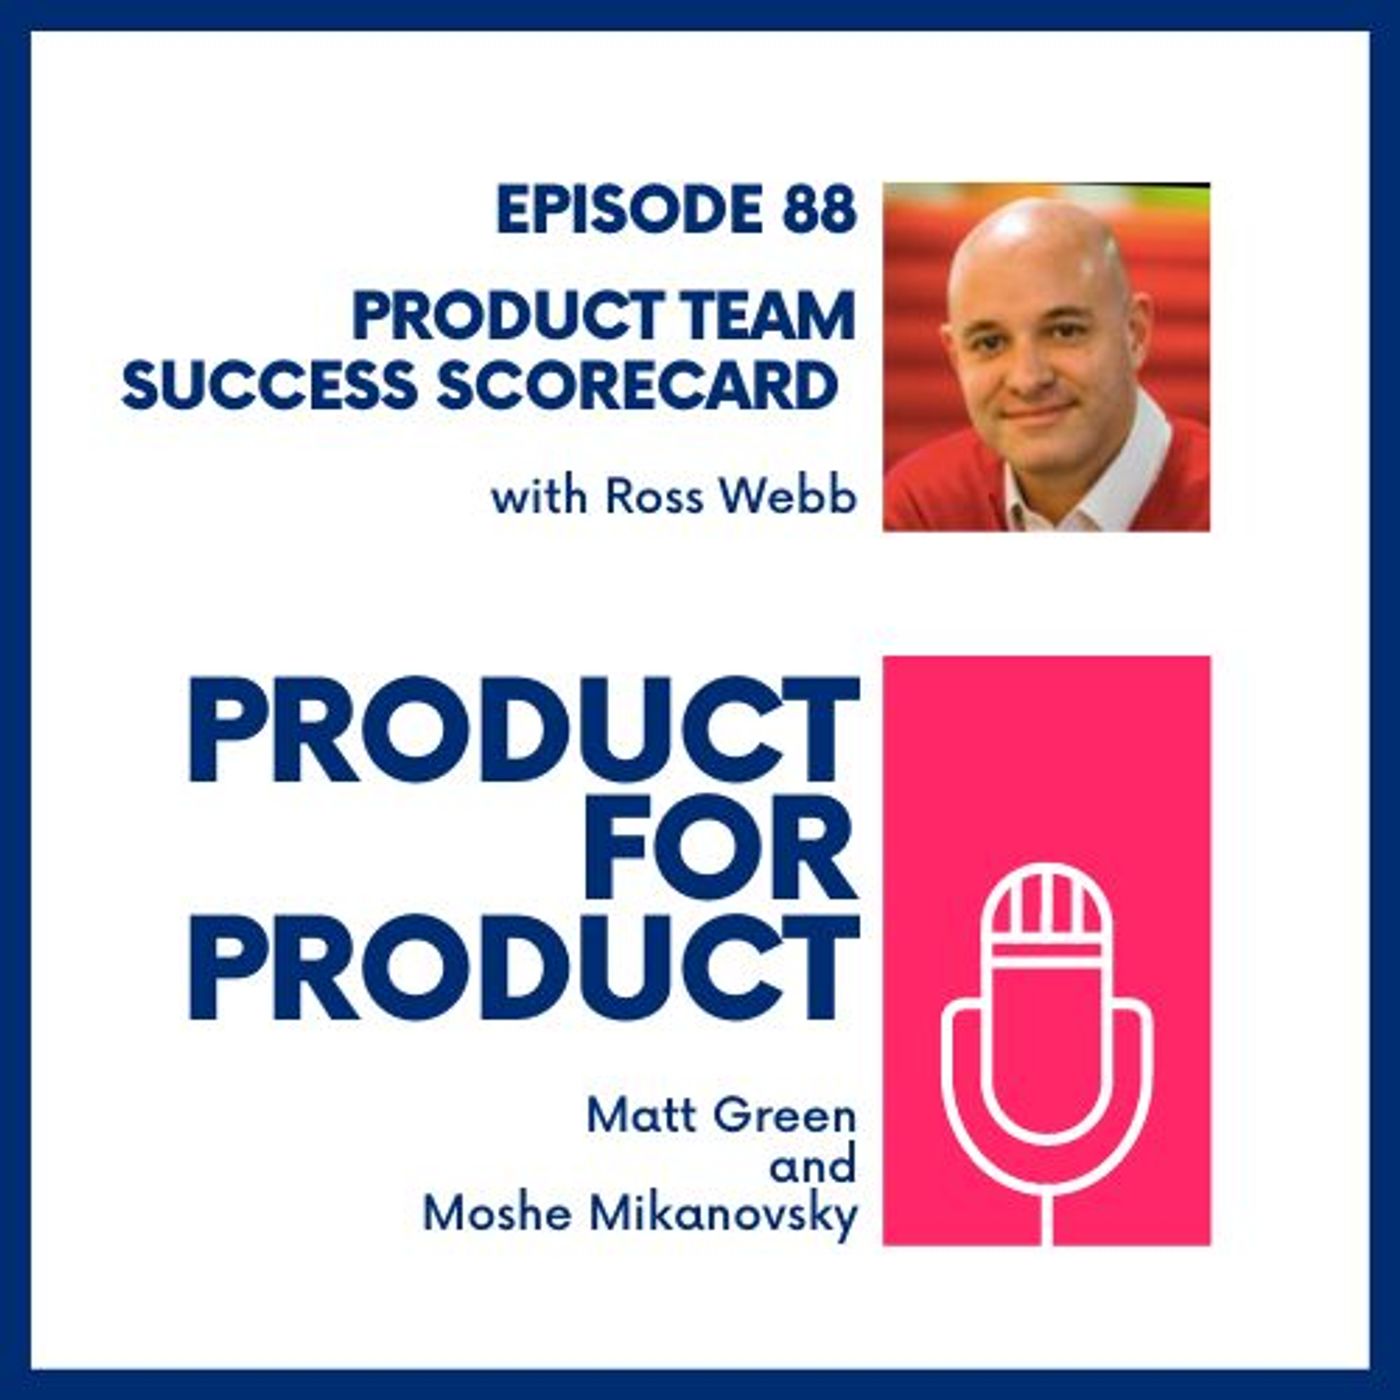 EP 88 - Product Team Success Scorecard with Ross Webb